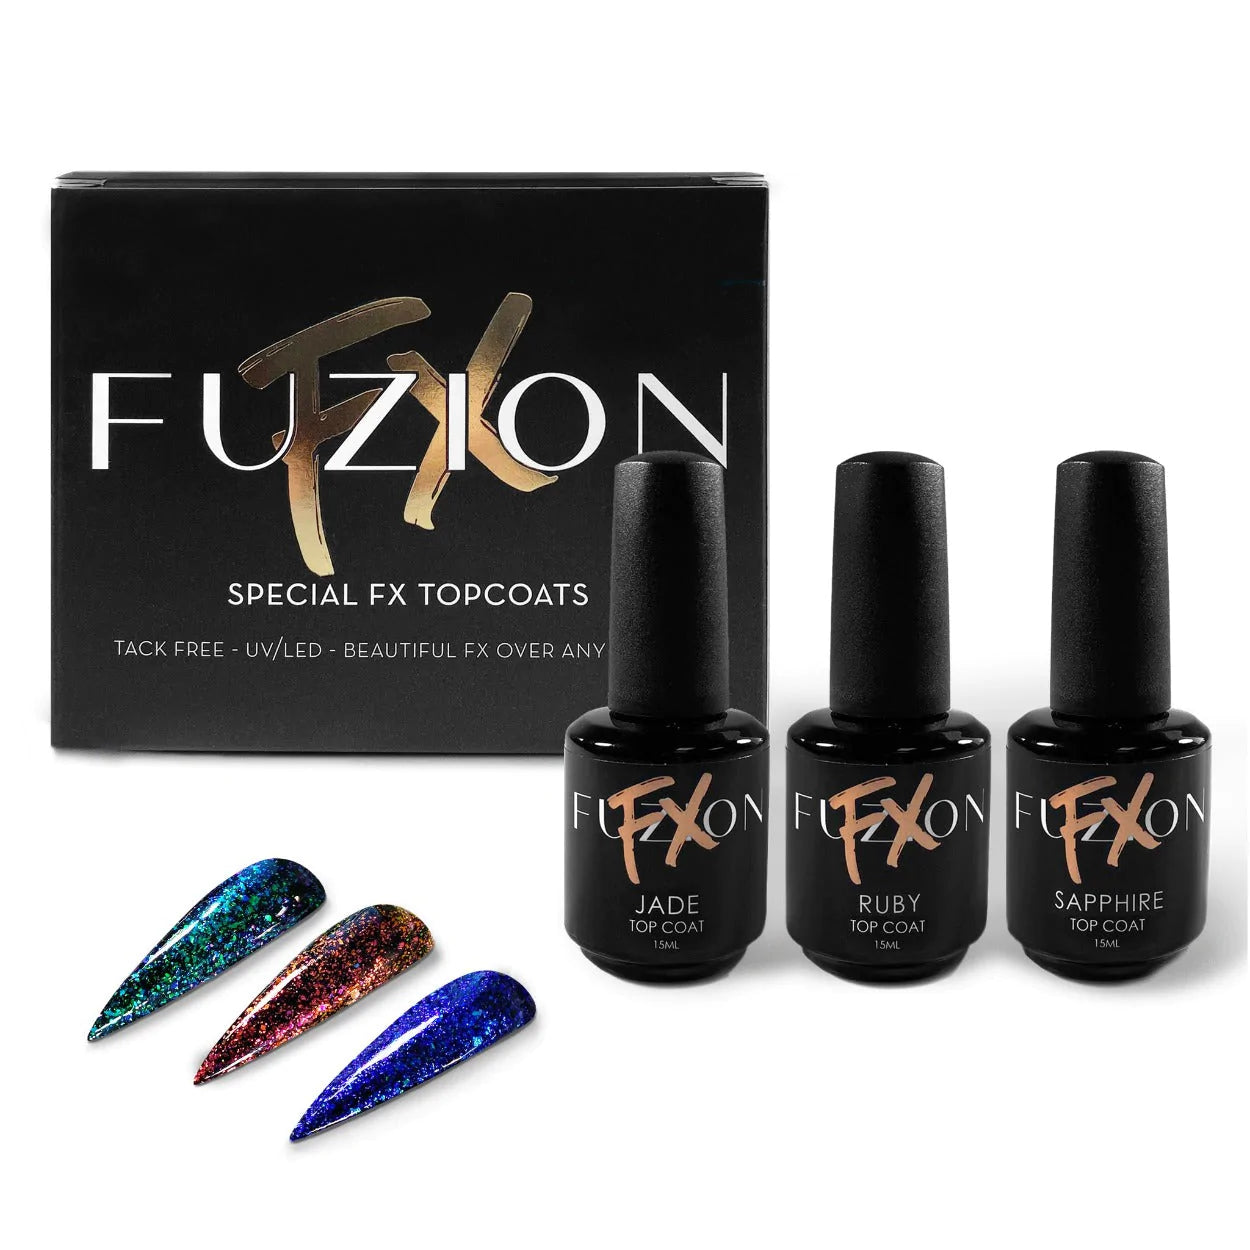 Fuzion FX Winter Flakes Topcoat 3pk - Creata Beauty - Professional Beauty Products